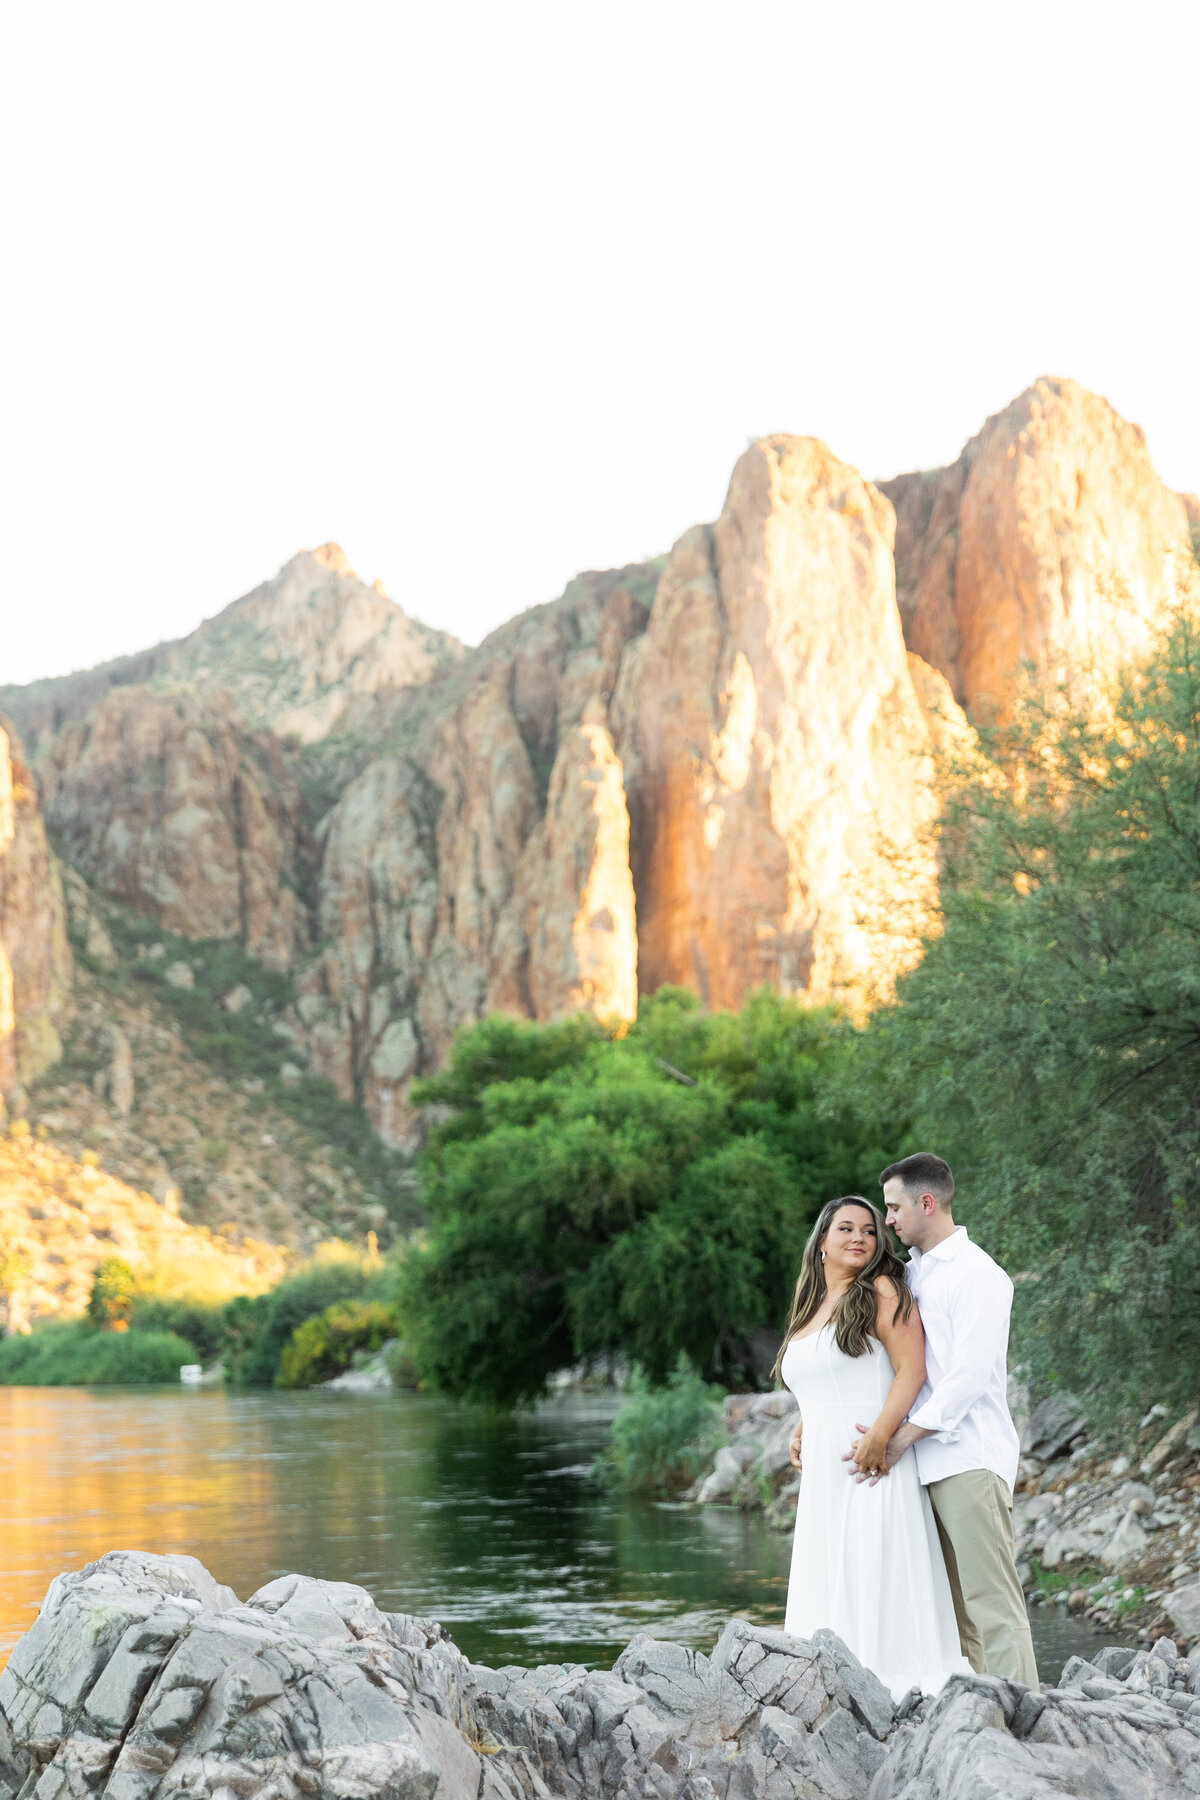 Karlie Colleen Photography - Kaitlyn & Cristian Engagement Session - Salt River Arizona-256